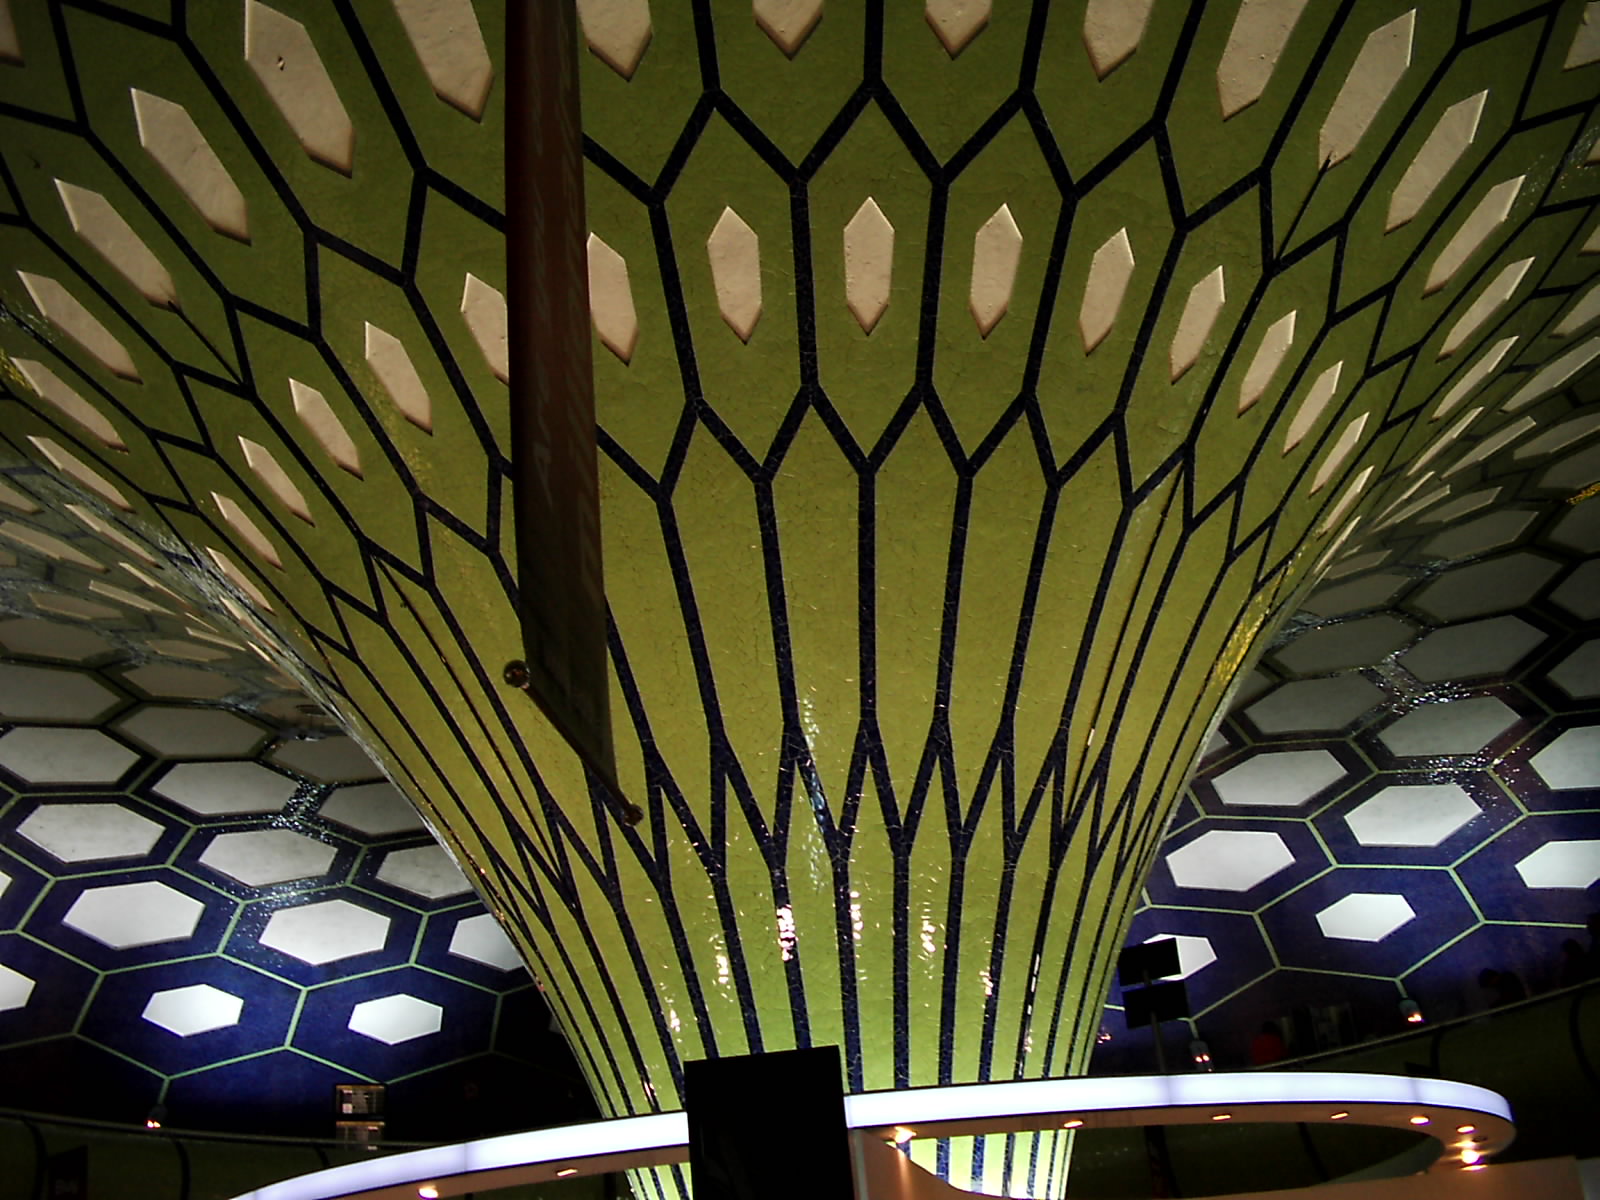 Airport in Abu Dhabi